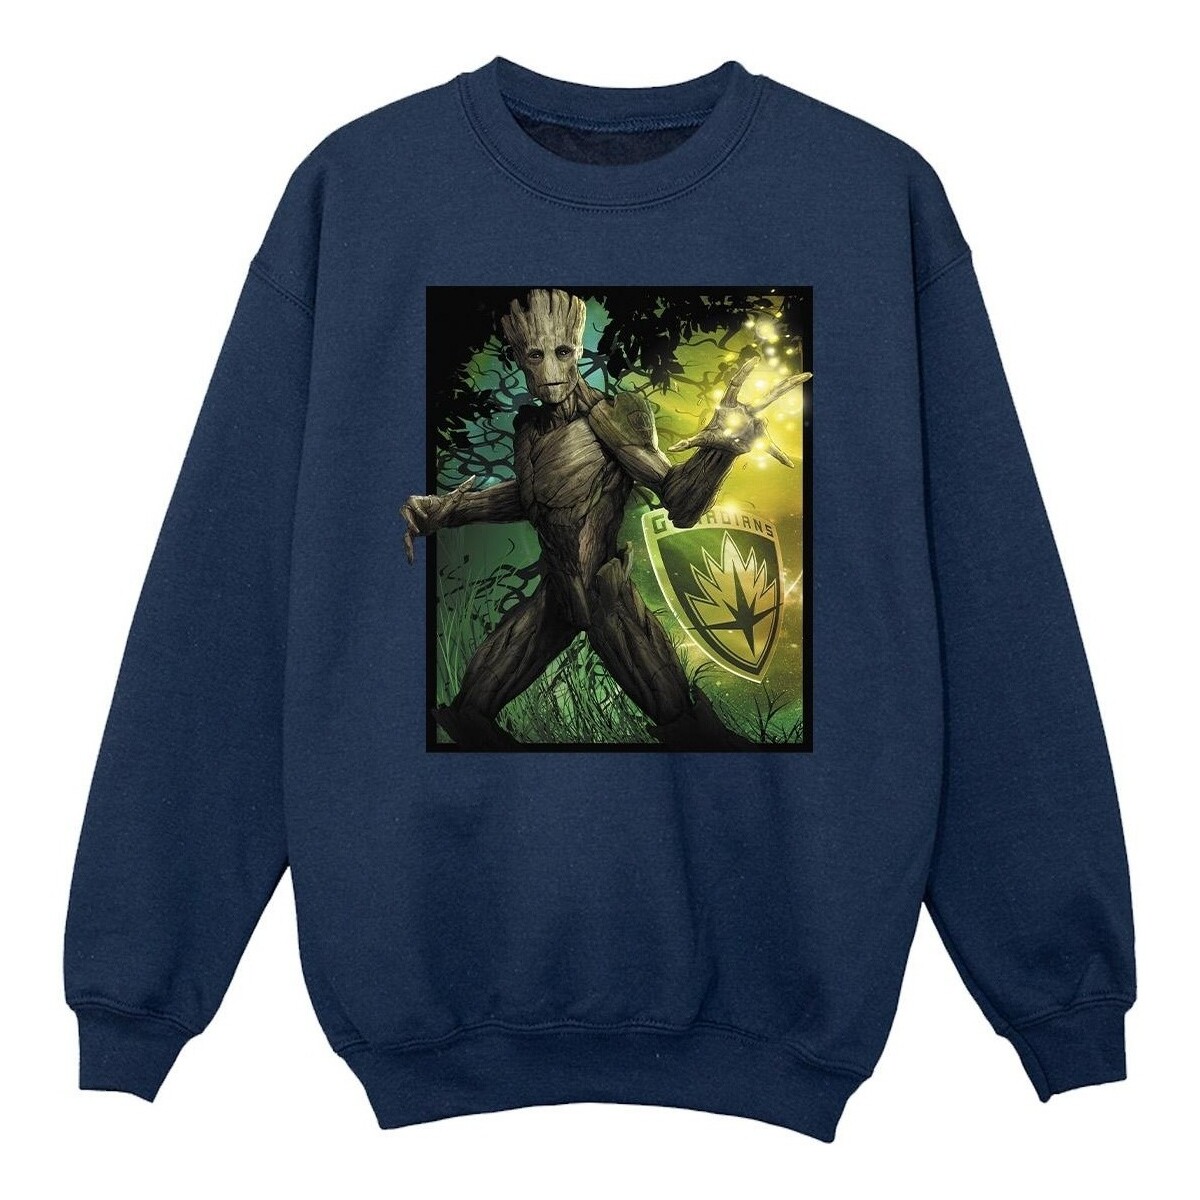 Vêtements Fille Sweats Marvel Guardians Of The Galaxy Groot Forest Energy Bleu